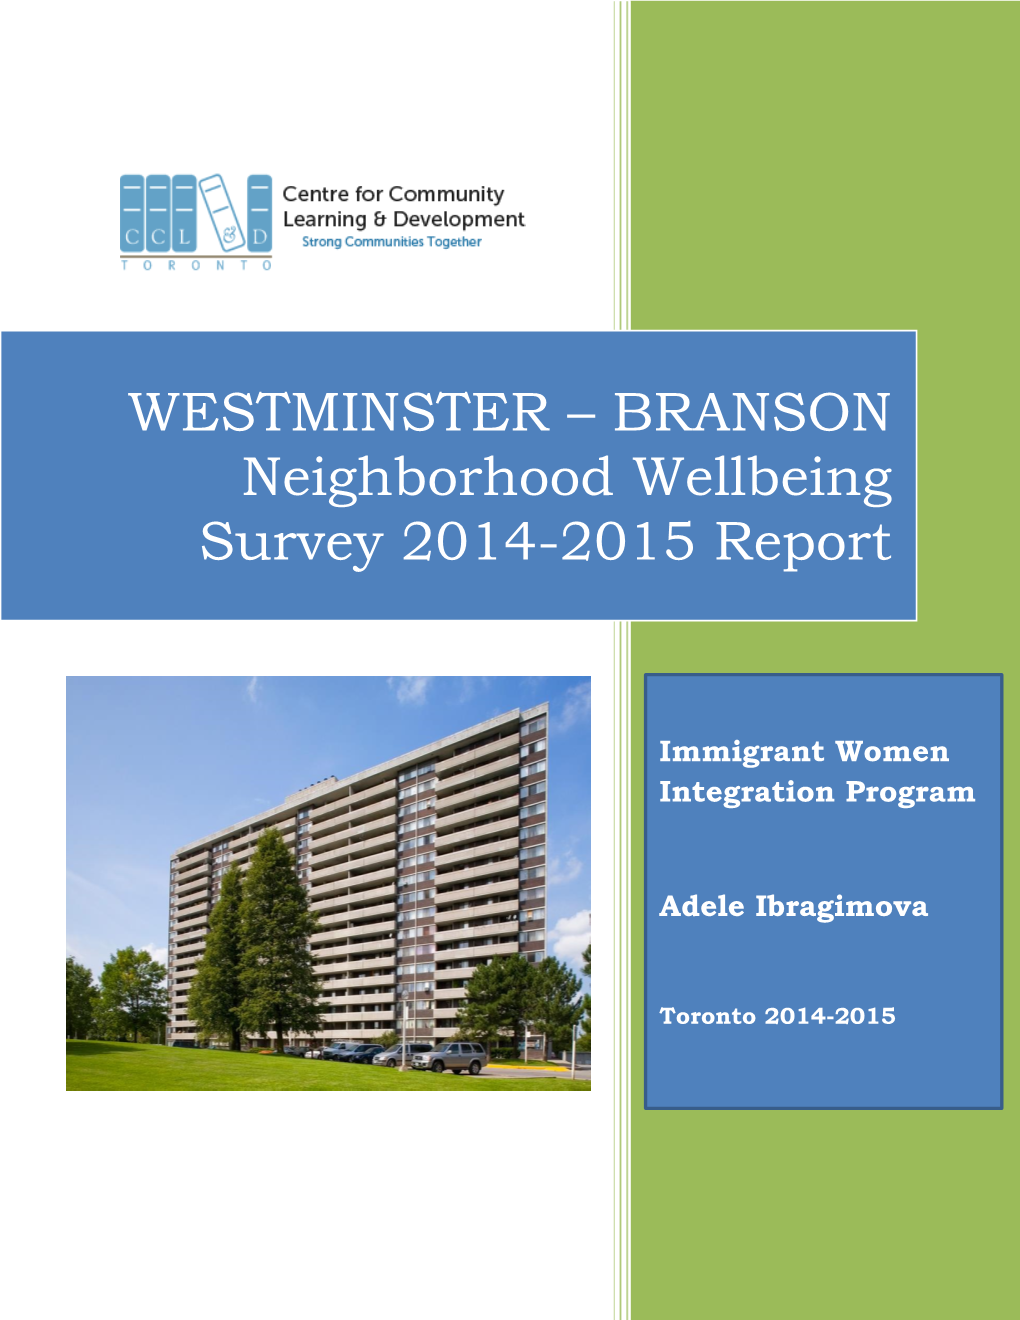 WESTMINSTER – BRANSON Neighborhood Wellbeing Survey 2014-2015 Report